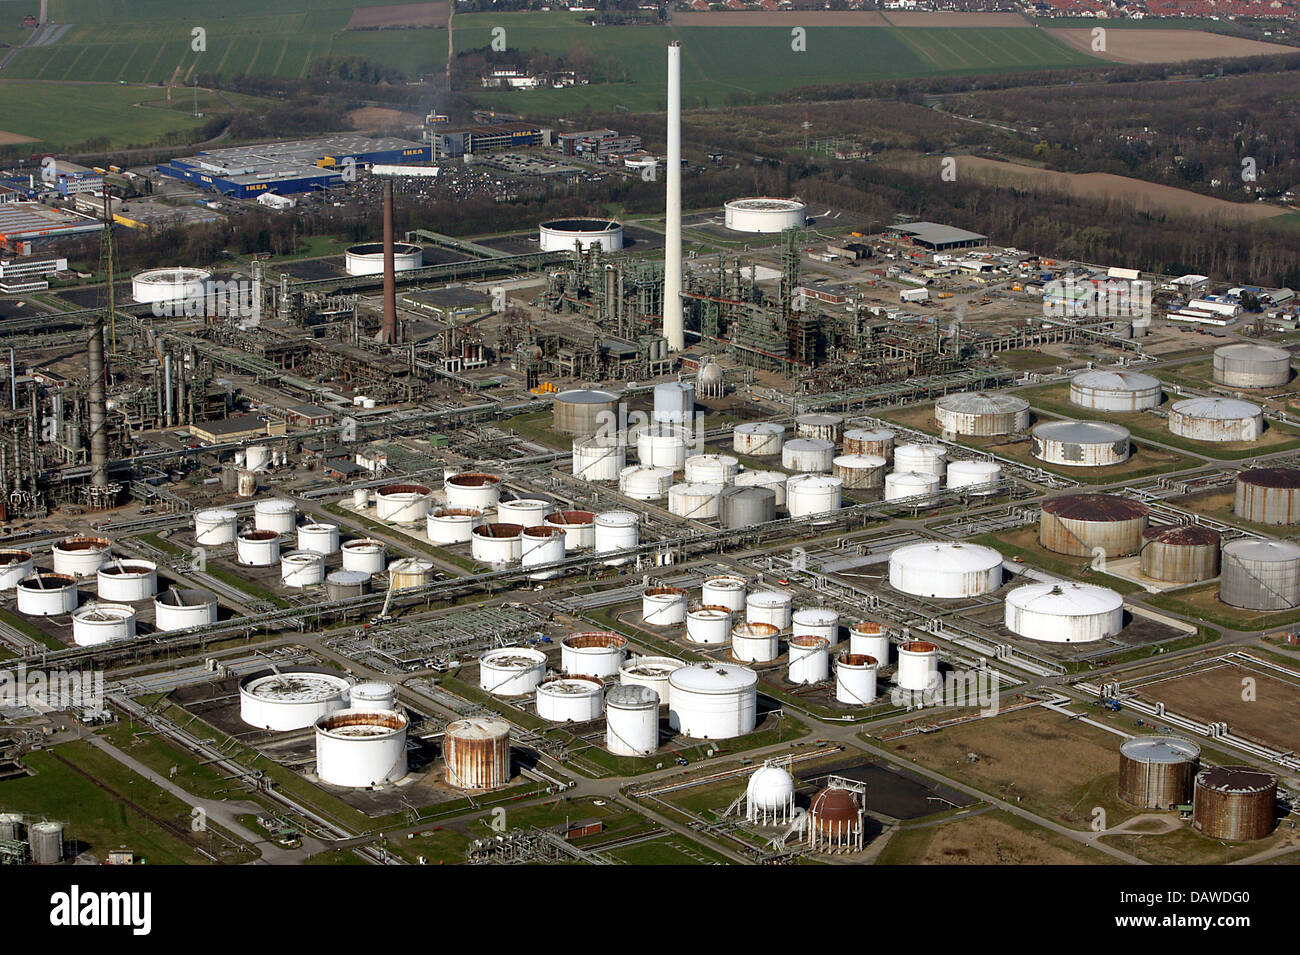 Shell-Raffinerie in Wesseling - Beseitigung des Kerosin-Sees wird